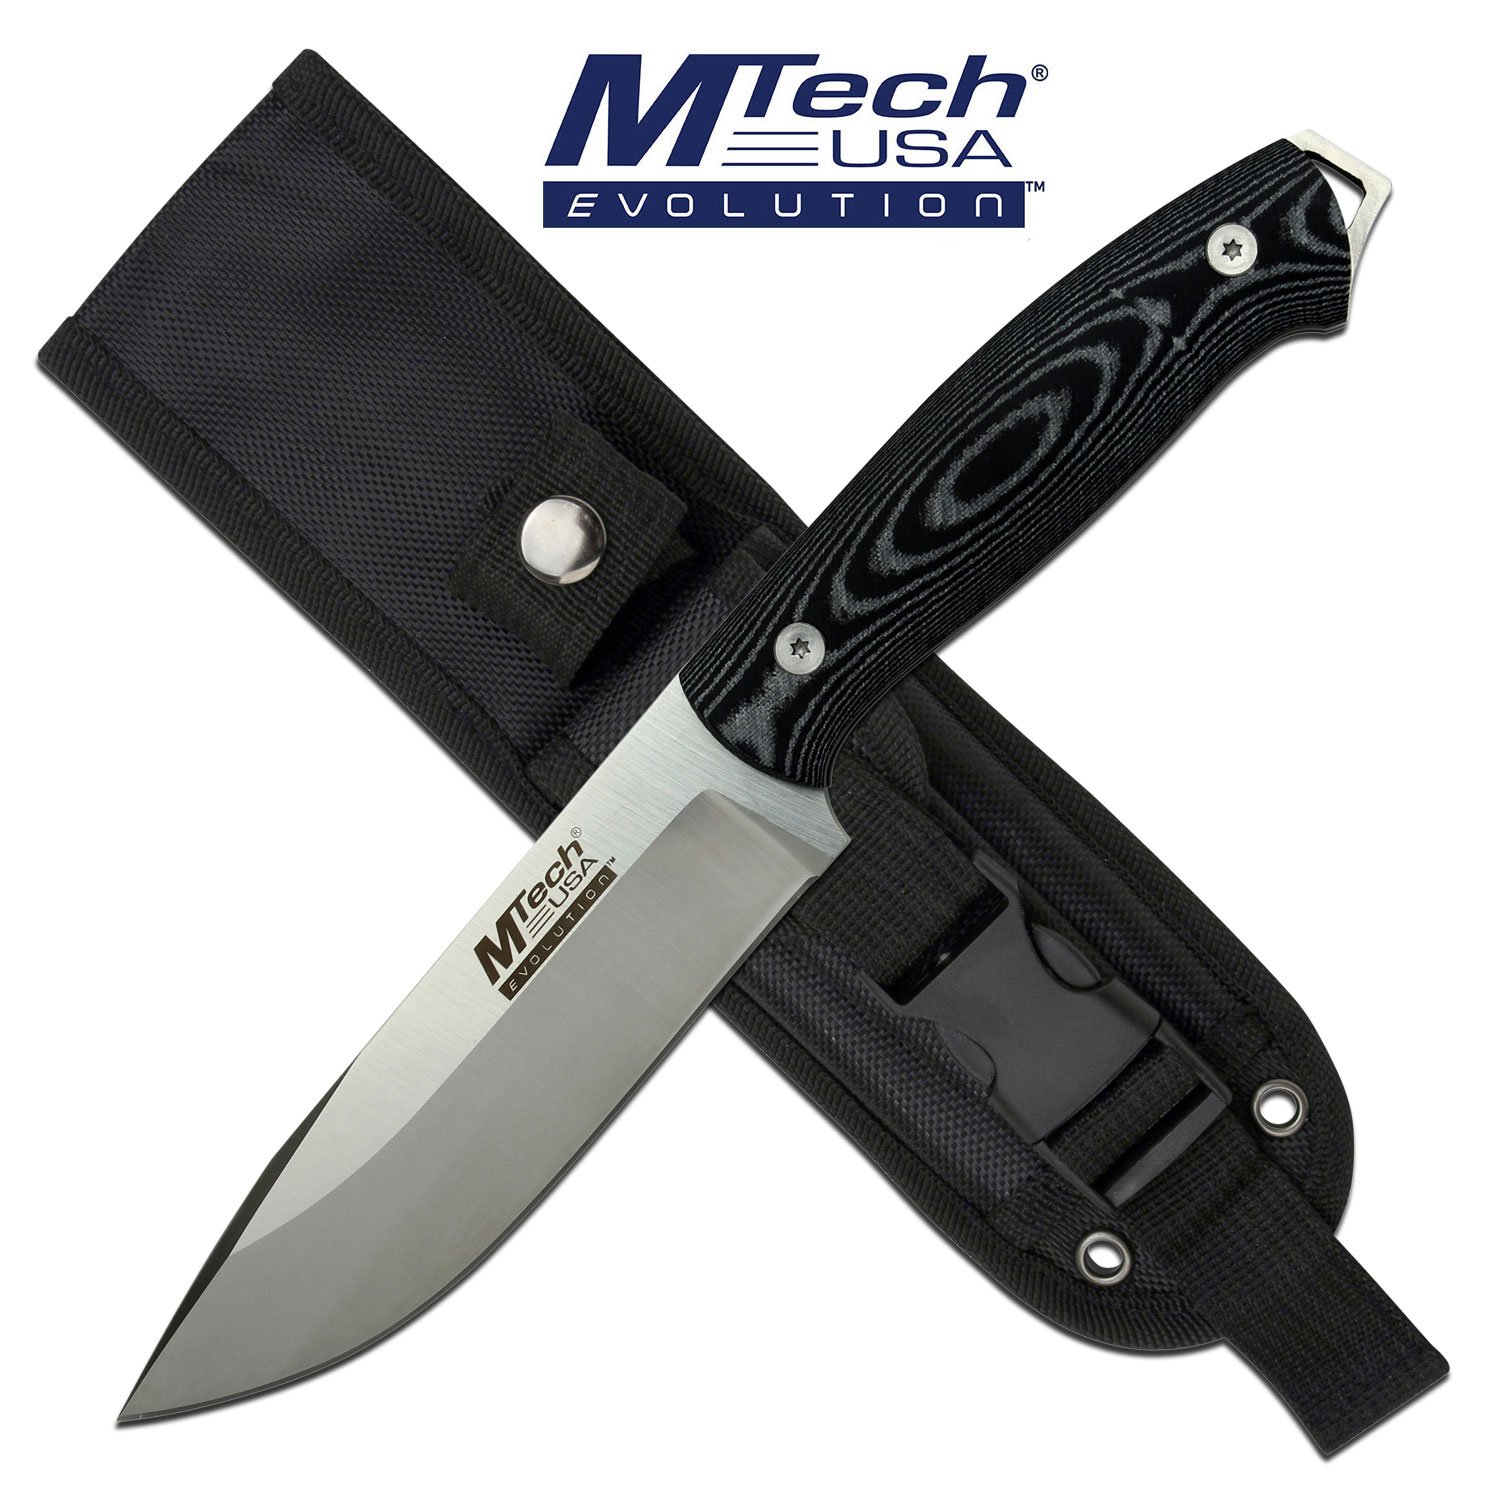 Tactical Knife Mtech Evolution Full Tang Black Micarta Tactical Combat + Sheath